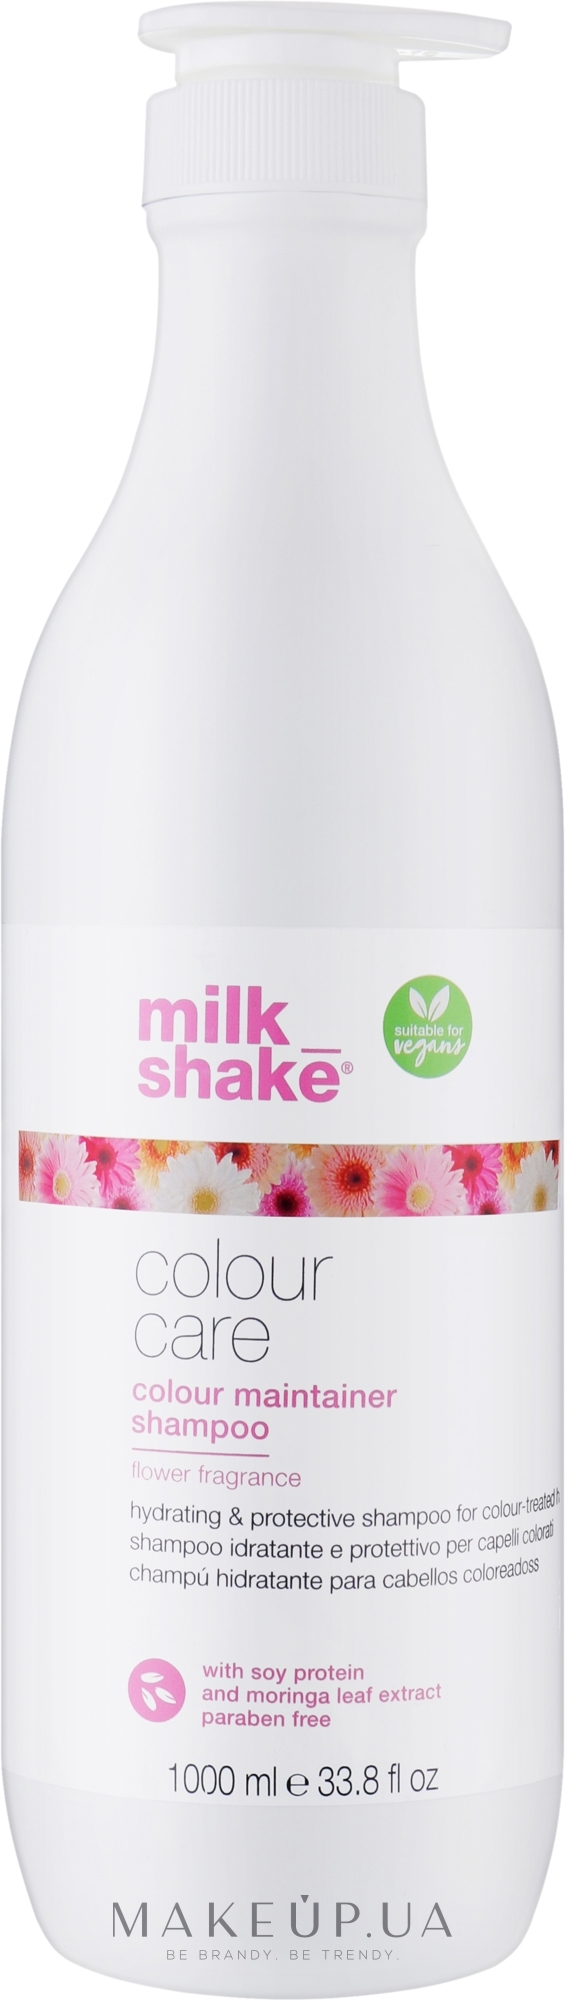 Шампунь для окрашенных волос с цветочным ароматом - Milk_Shake Color Care Maintainer Shampoo Flower Fragrance — фото 1000ml